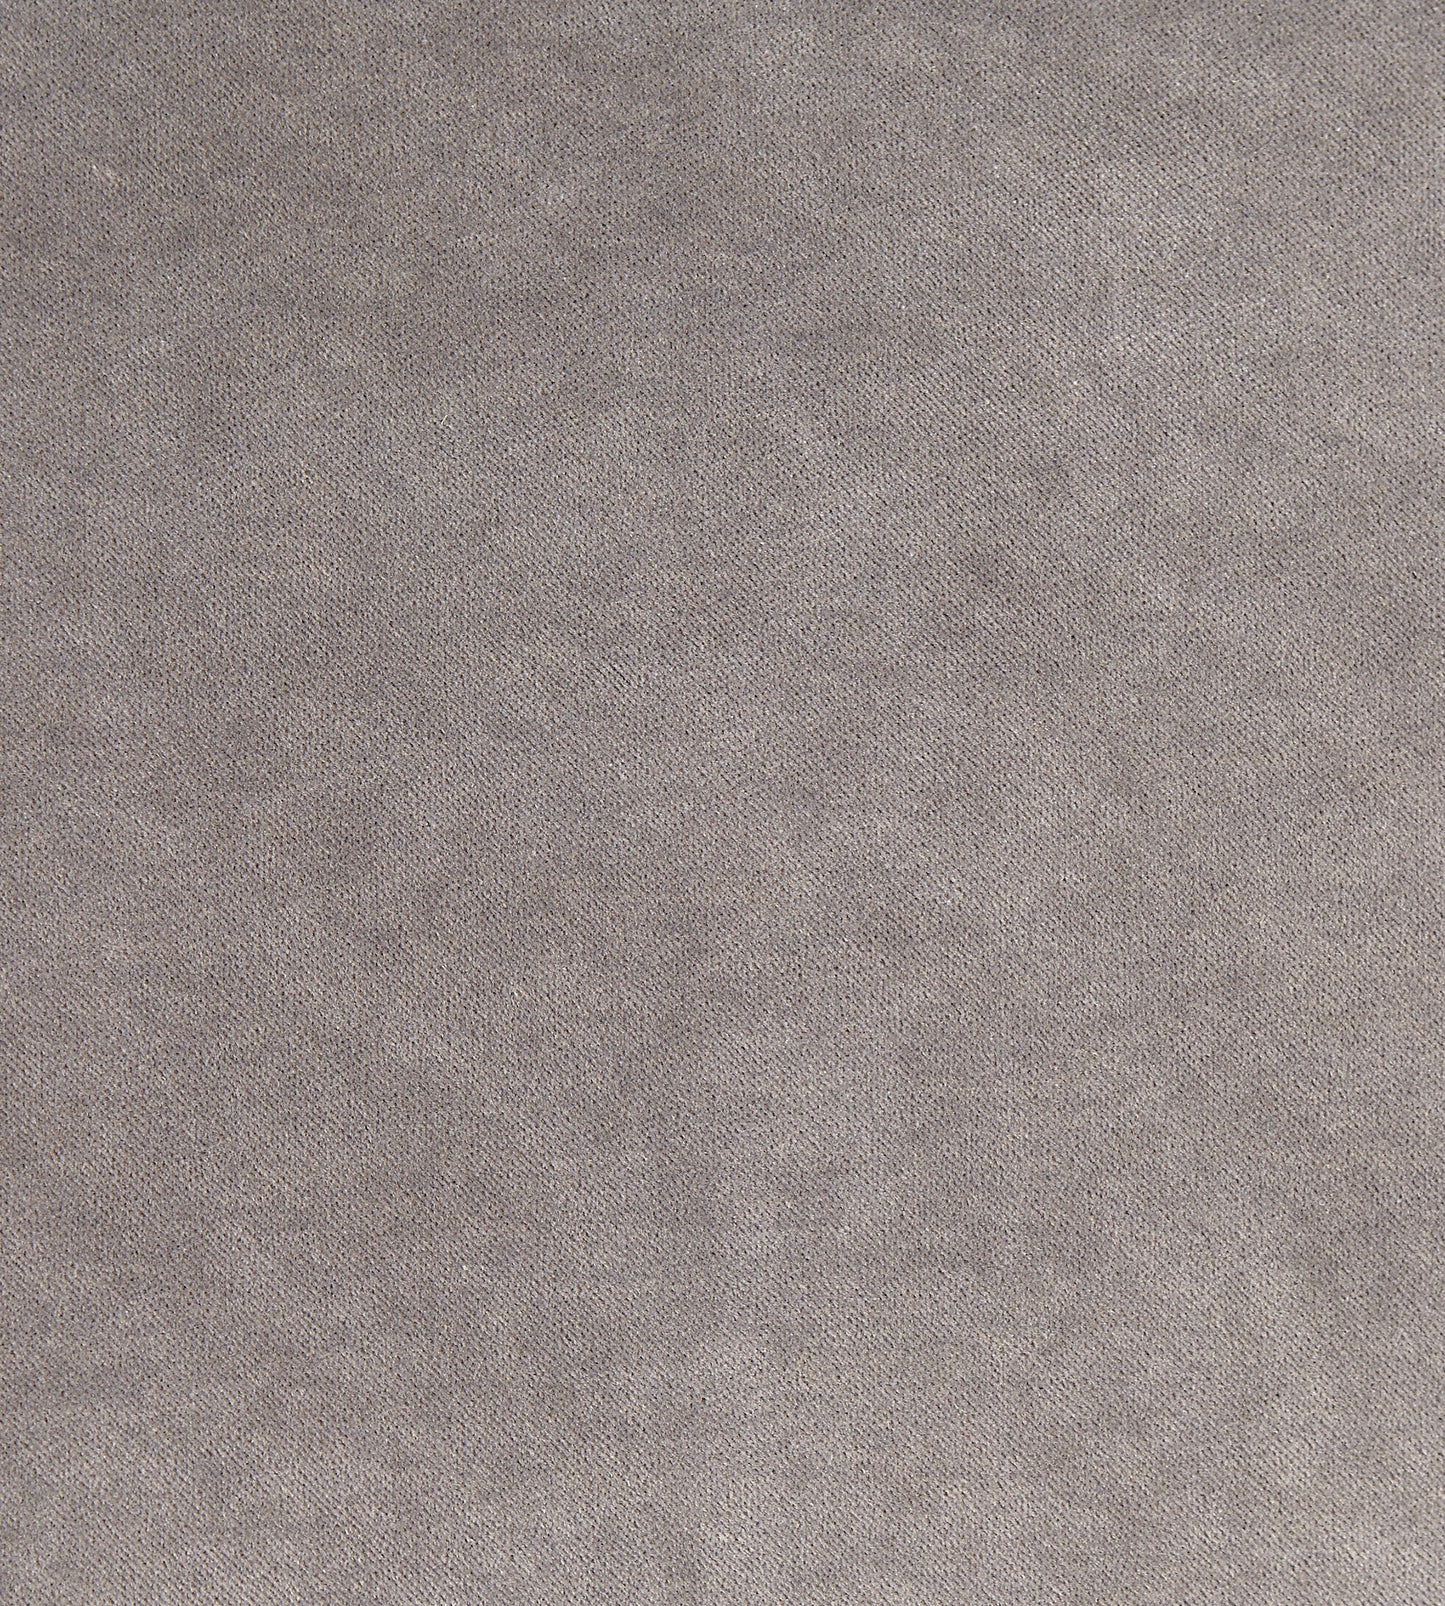 Purchase Boris Kroll Fabric Product SC 0004K65110, Aurora Velvet Grey Flannel 1